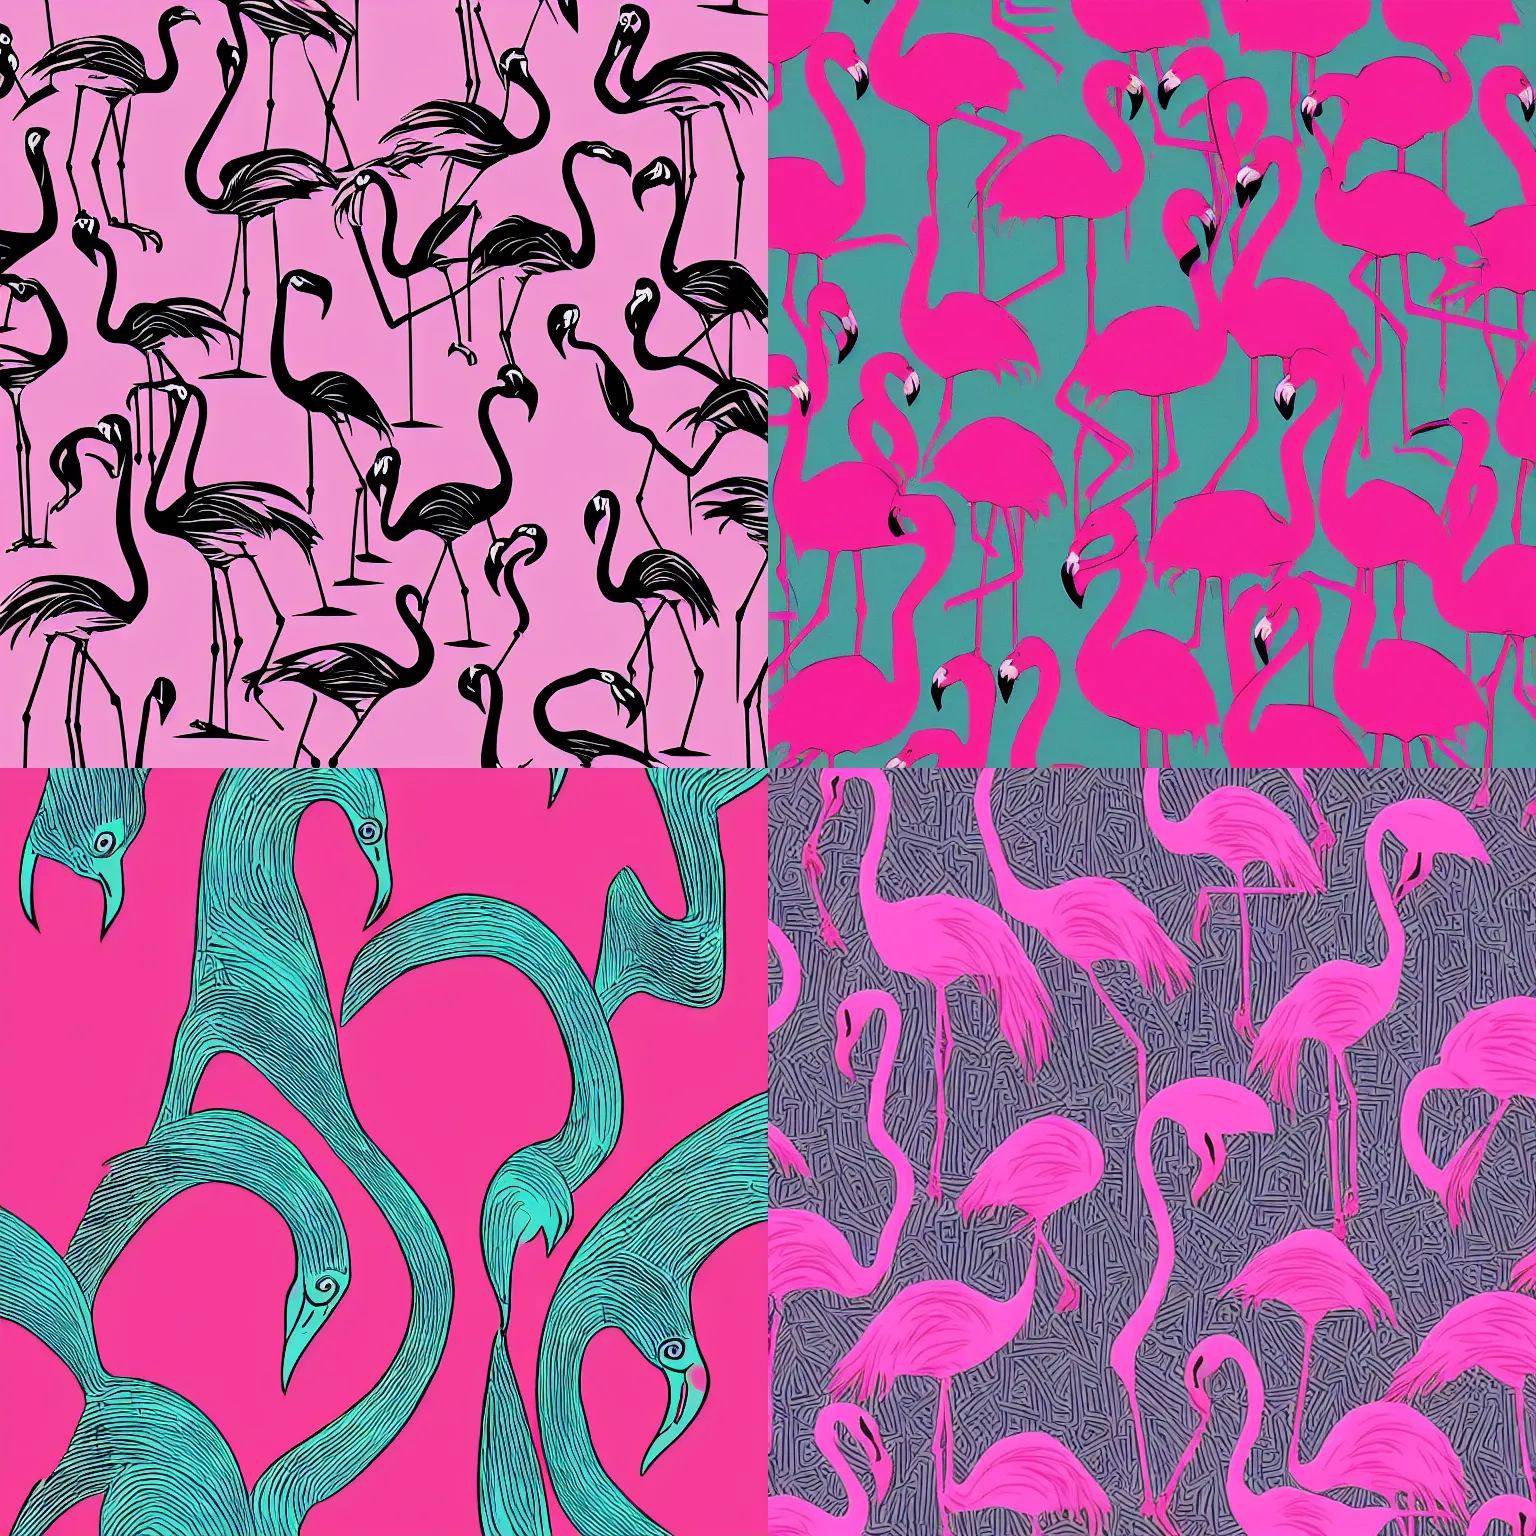 Prompt: saul bass designed cyberpunk pink flamingo wallpaper